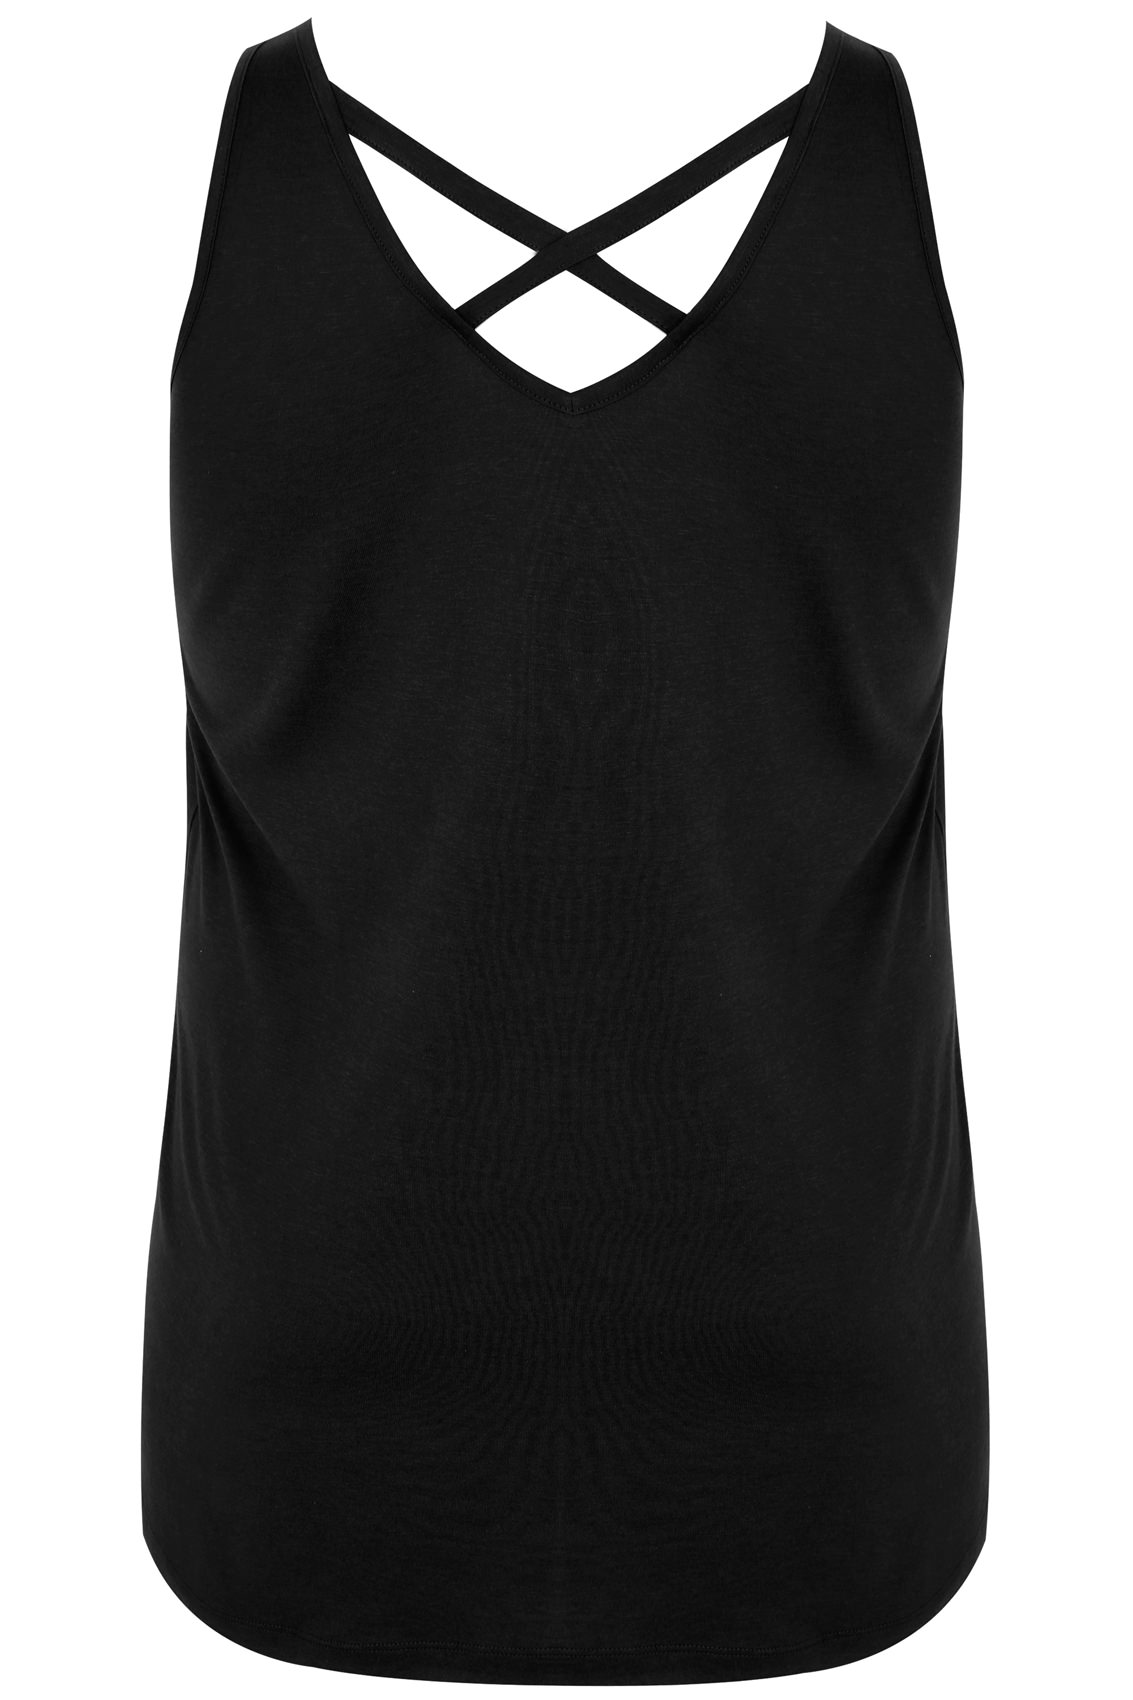 Black V-Neck Vest Top With Cross Back Detail, Plus size 16 to 36